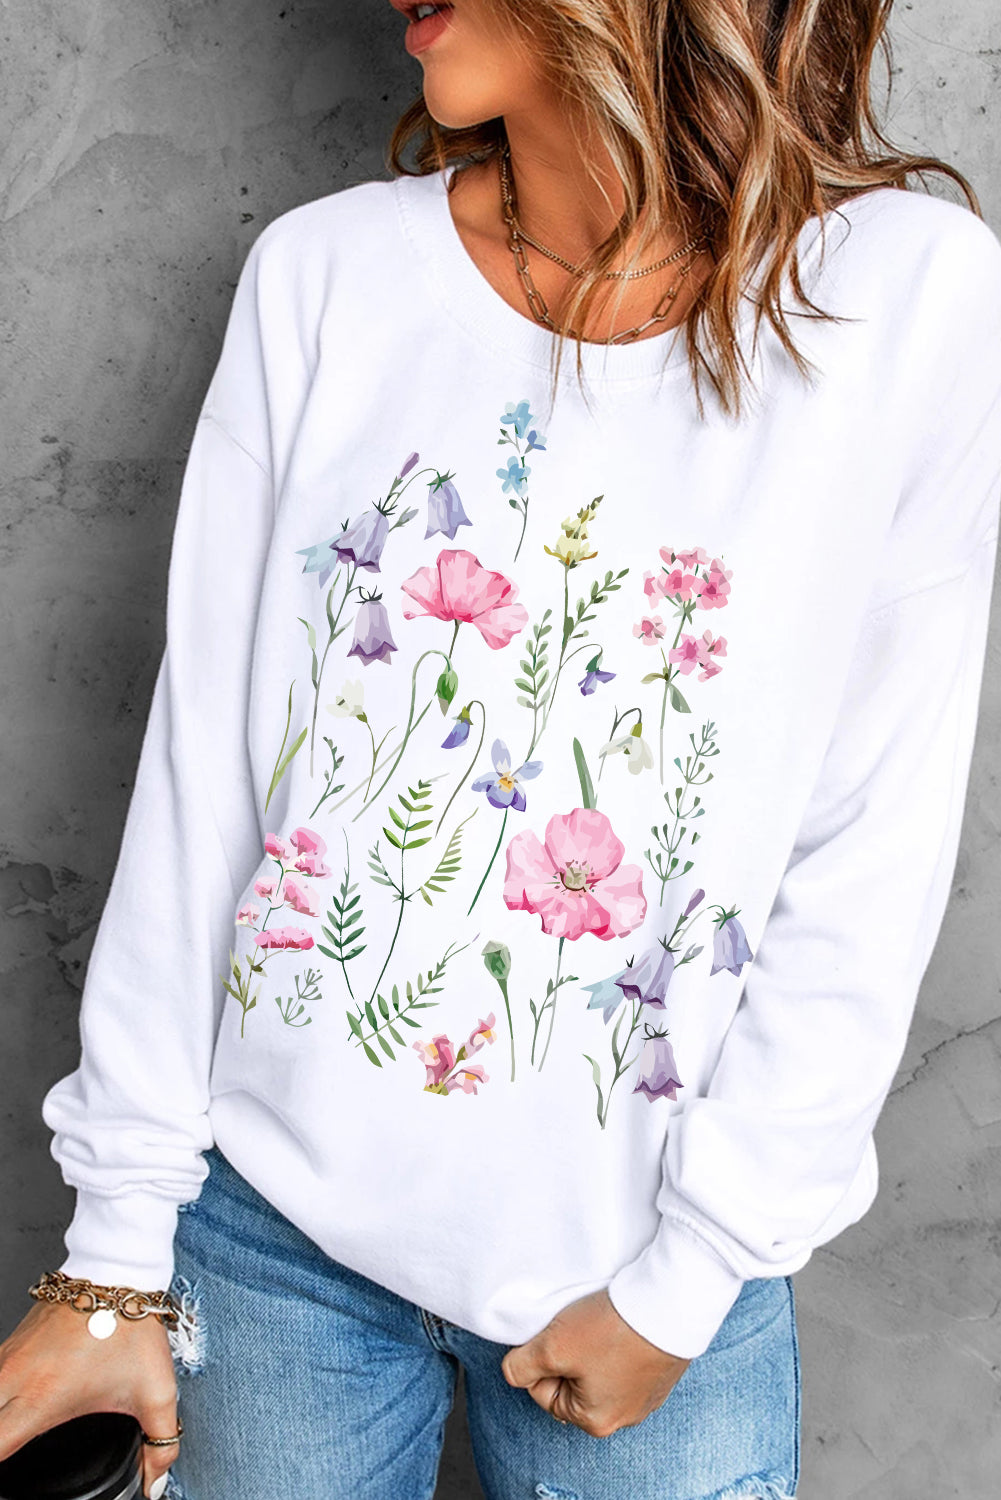 Floral Print Plain Crew Neck Sweatshirt $ 29.99 - Evaless